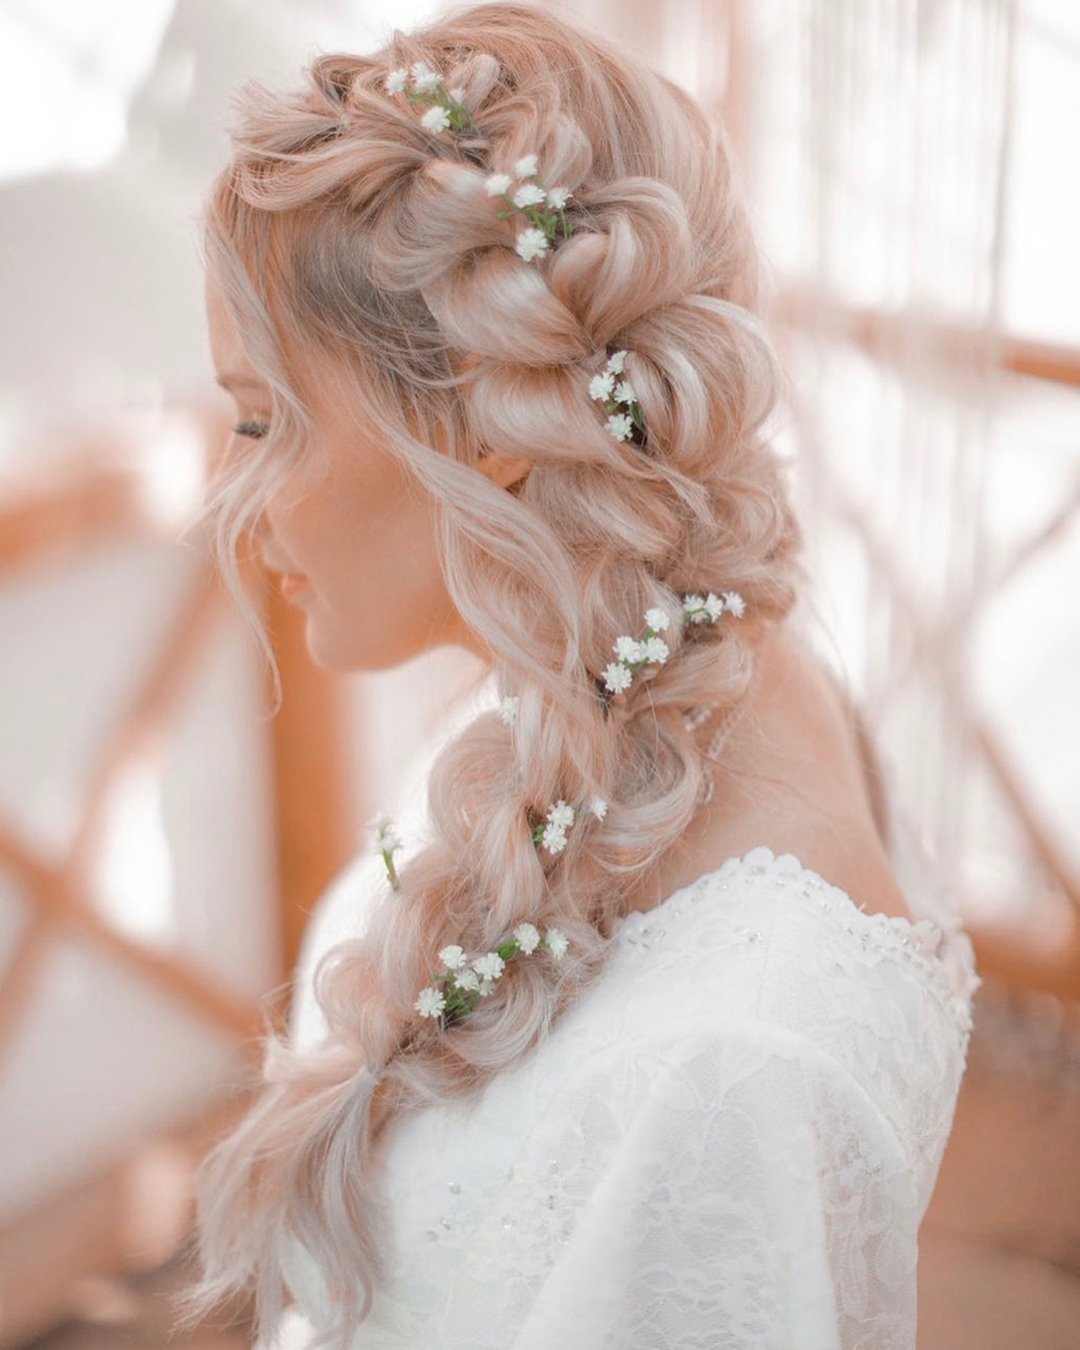 wedding hairstyles for long hair side mermaid braid on blonde with baby breath lauralovesshair